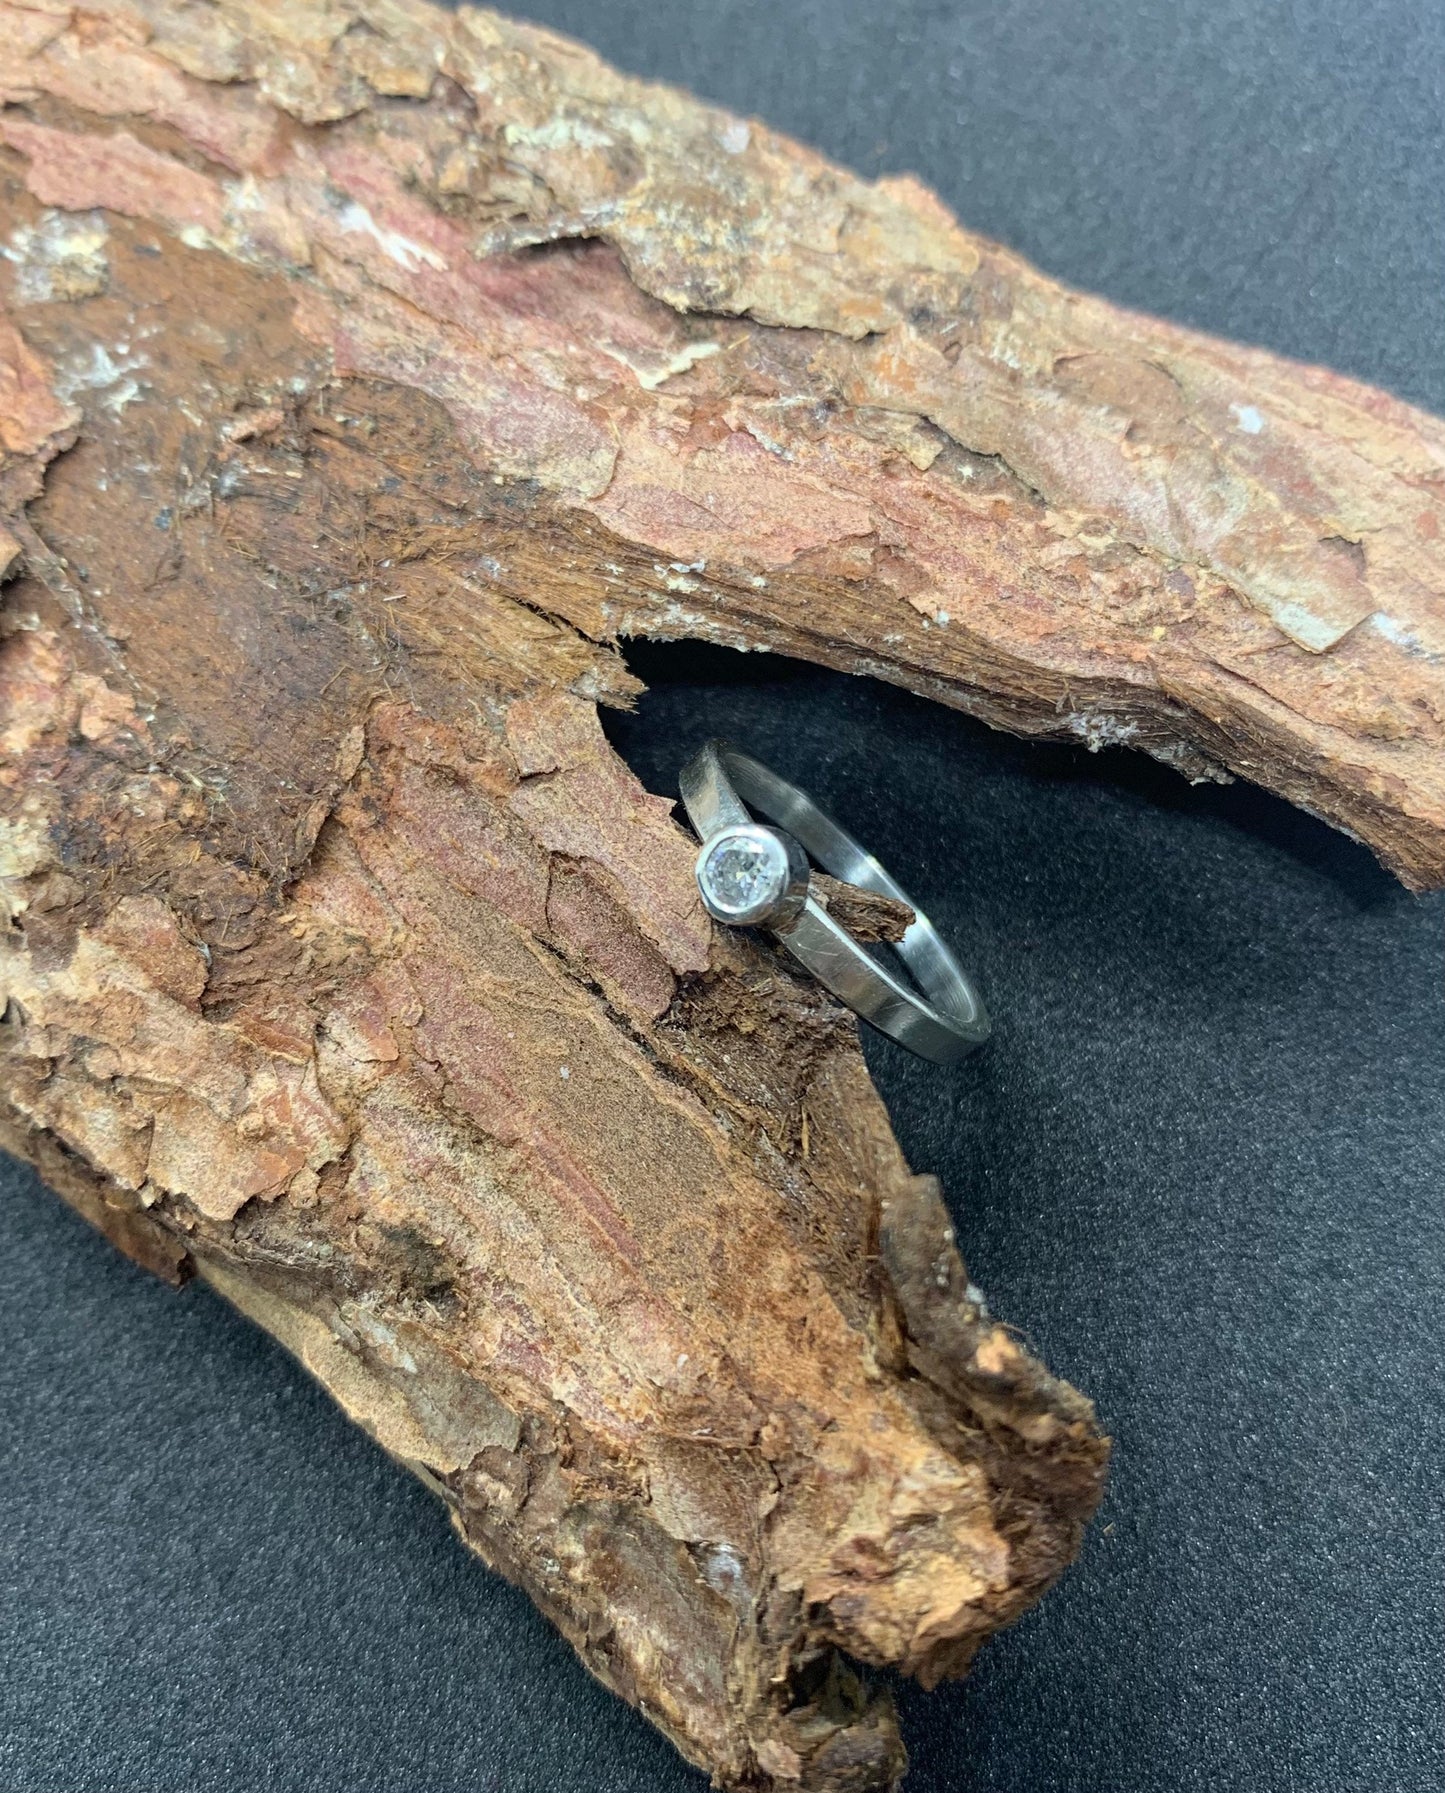 Sterling silver Swarovski gemstone ring